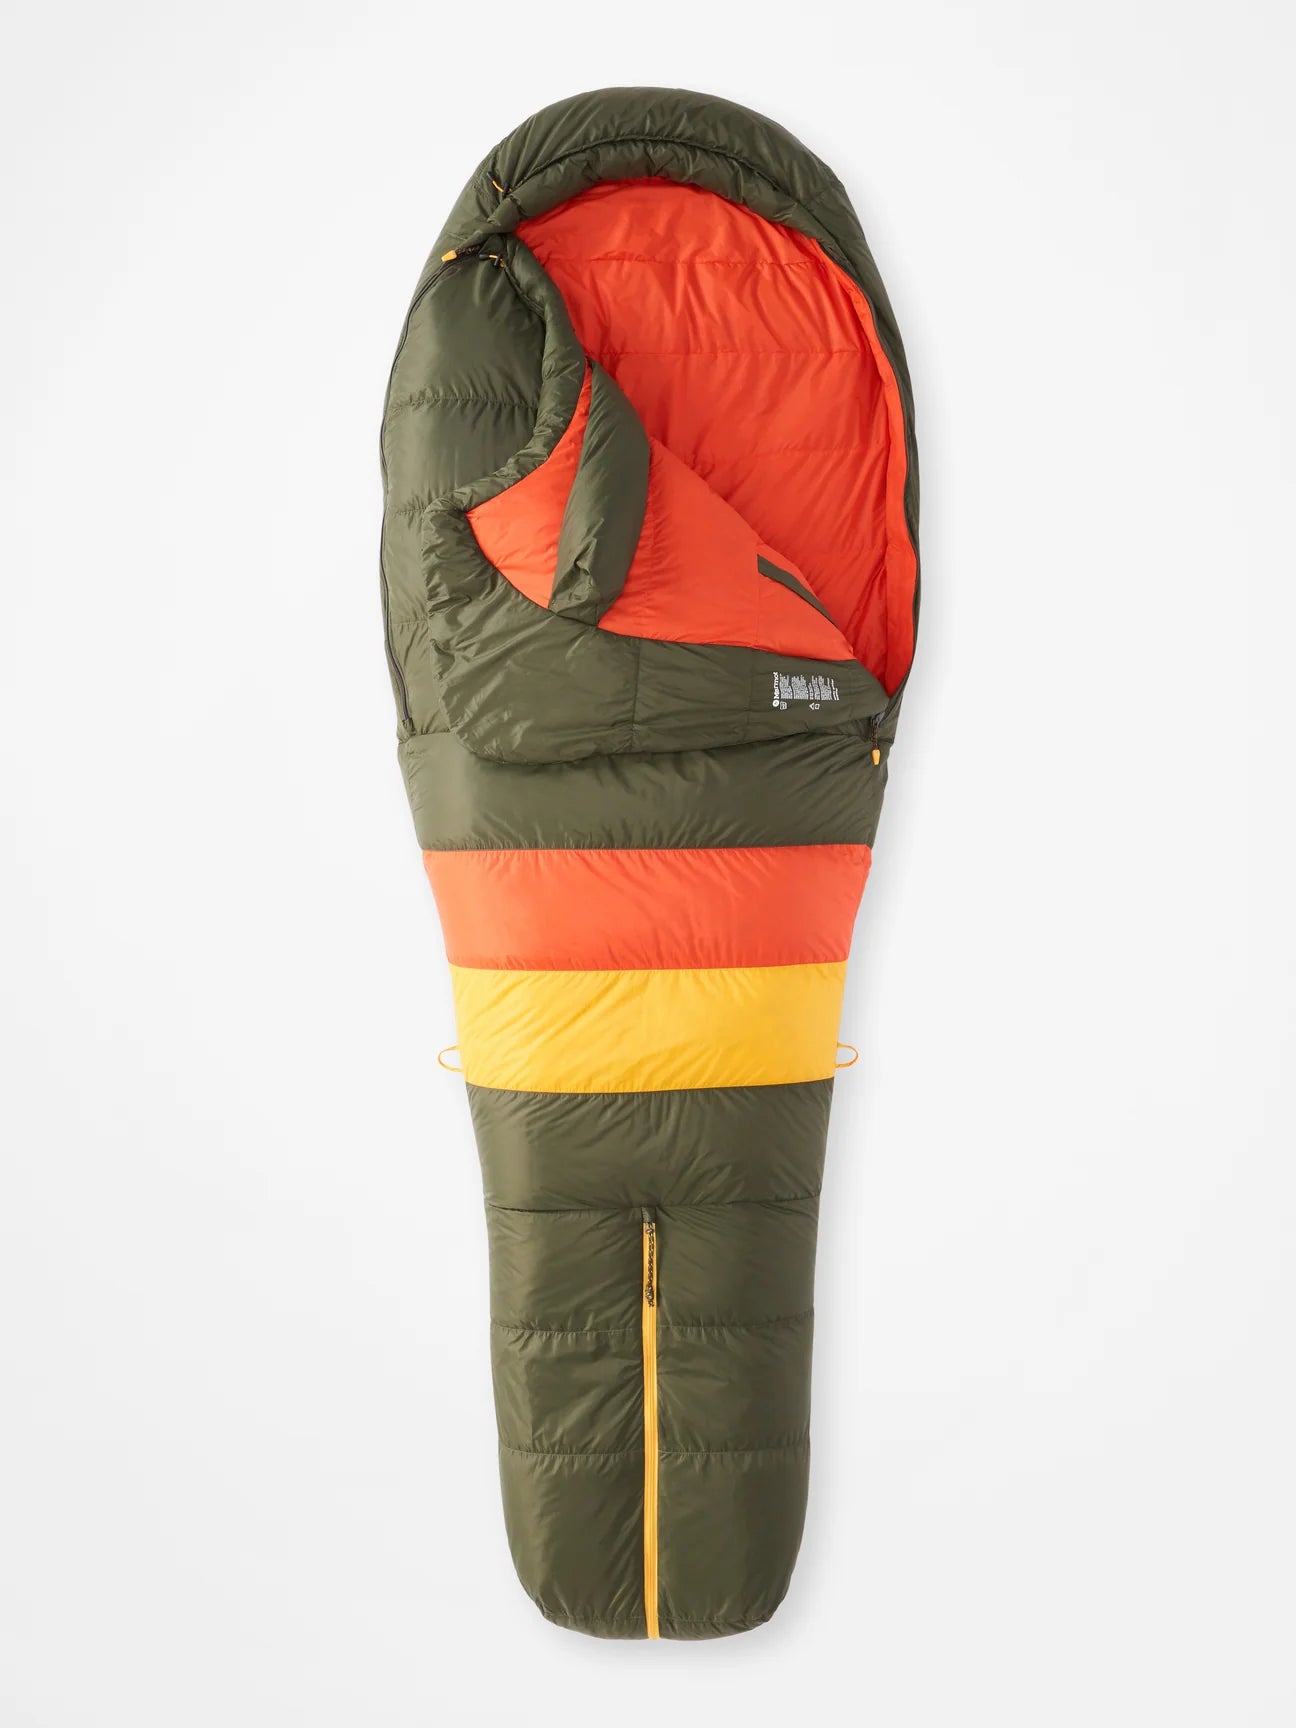 MarmotMarmot Never Winter Sleeping bag (-1°C)Outdoor Action